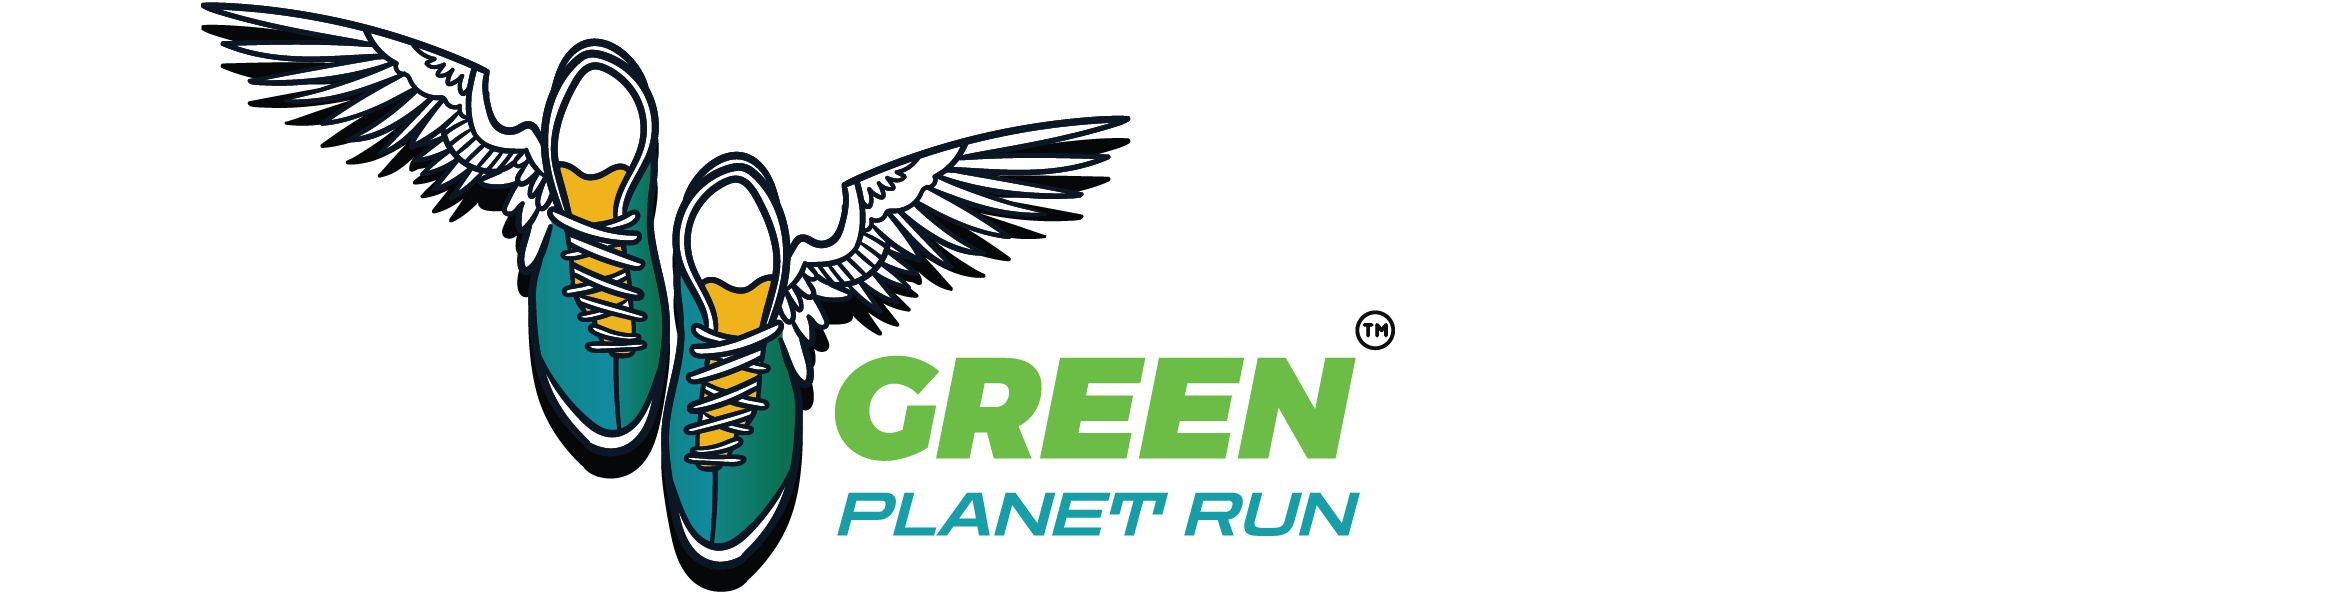 Green Planet Run